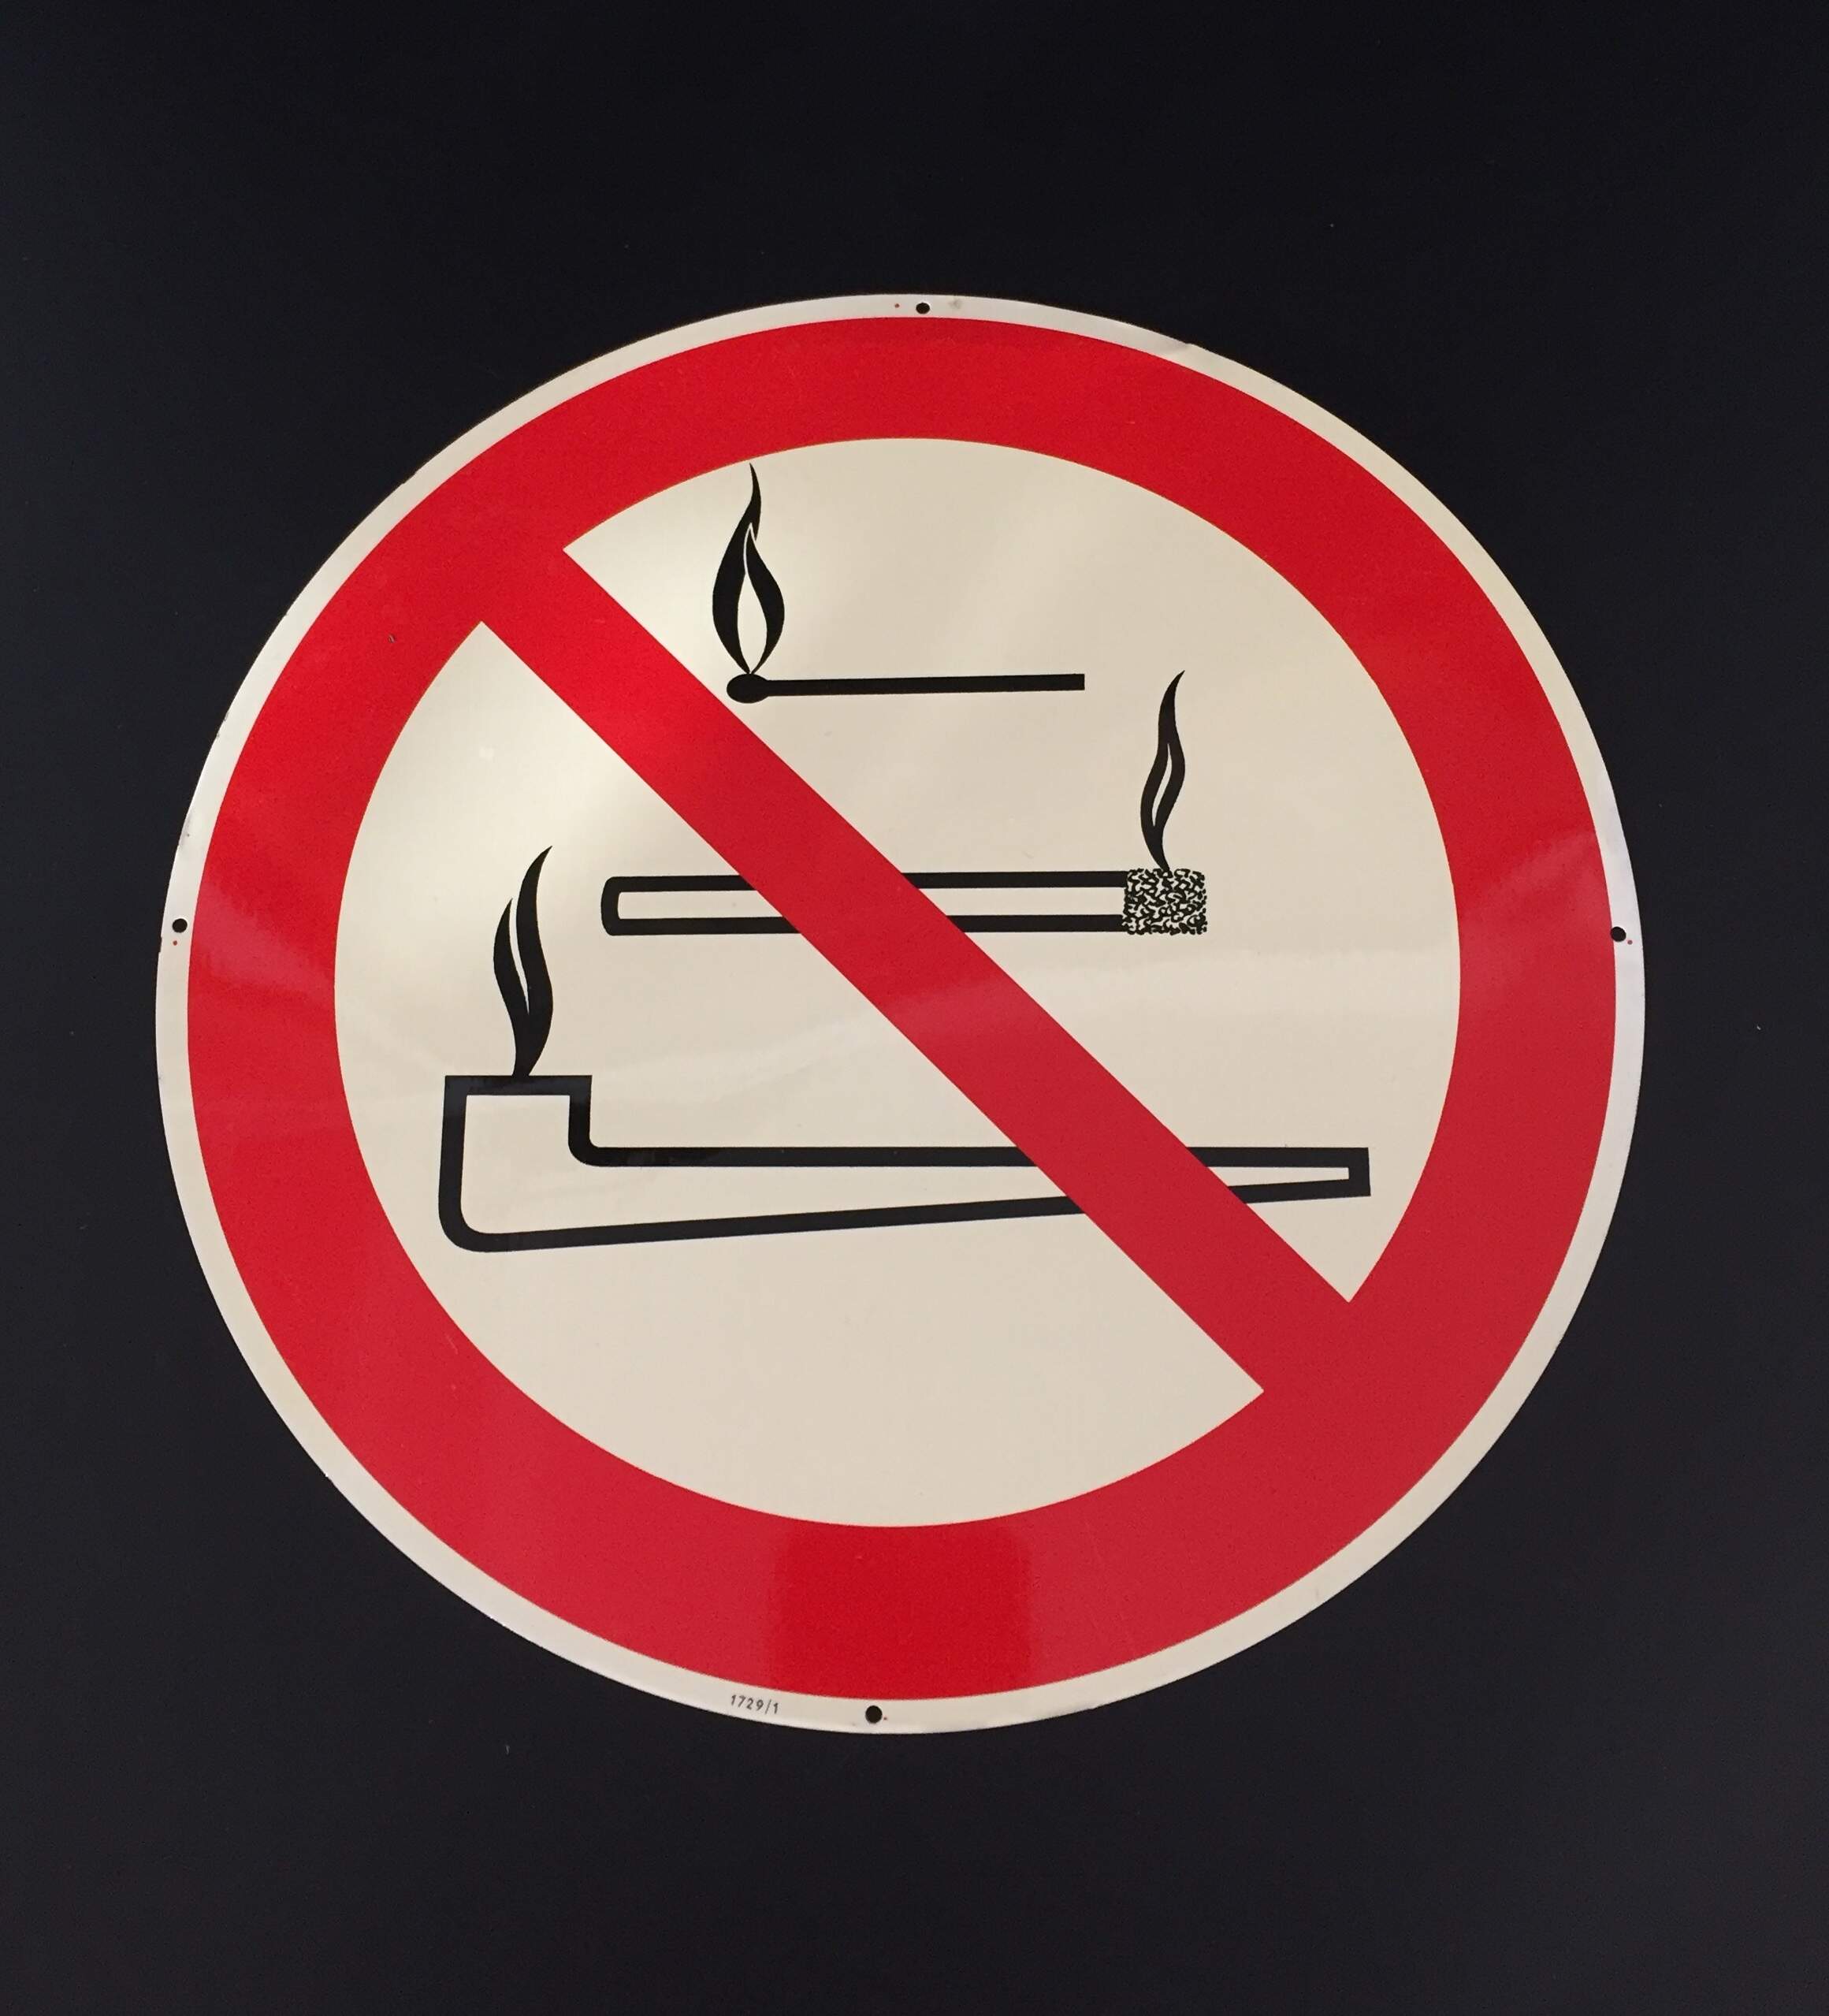 Blechschild Rauchen verboten